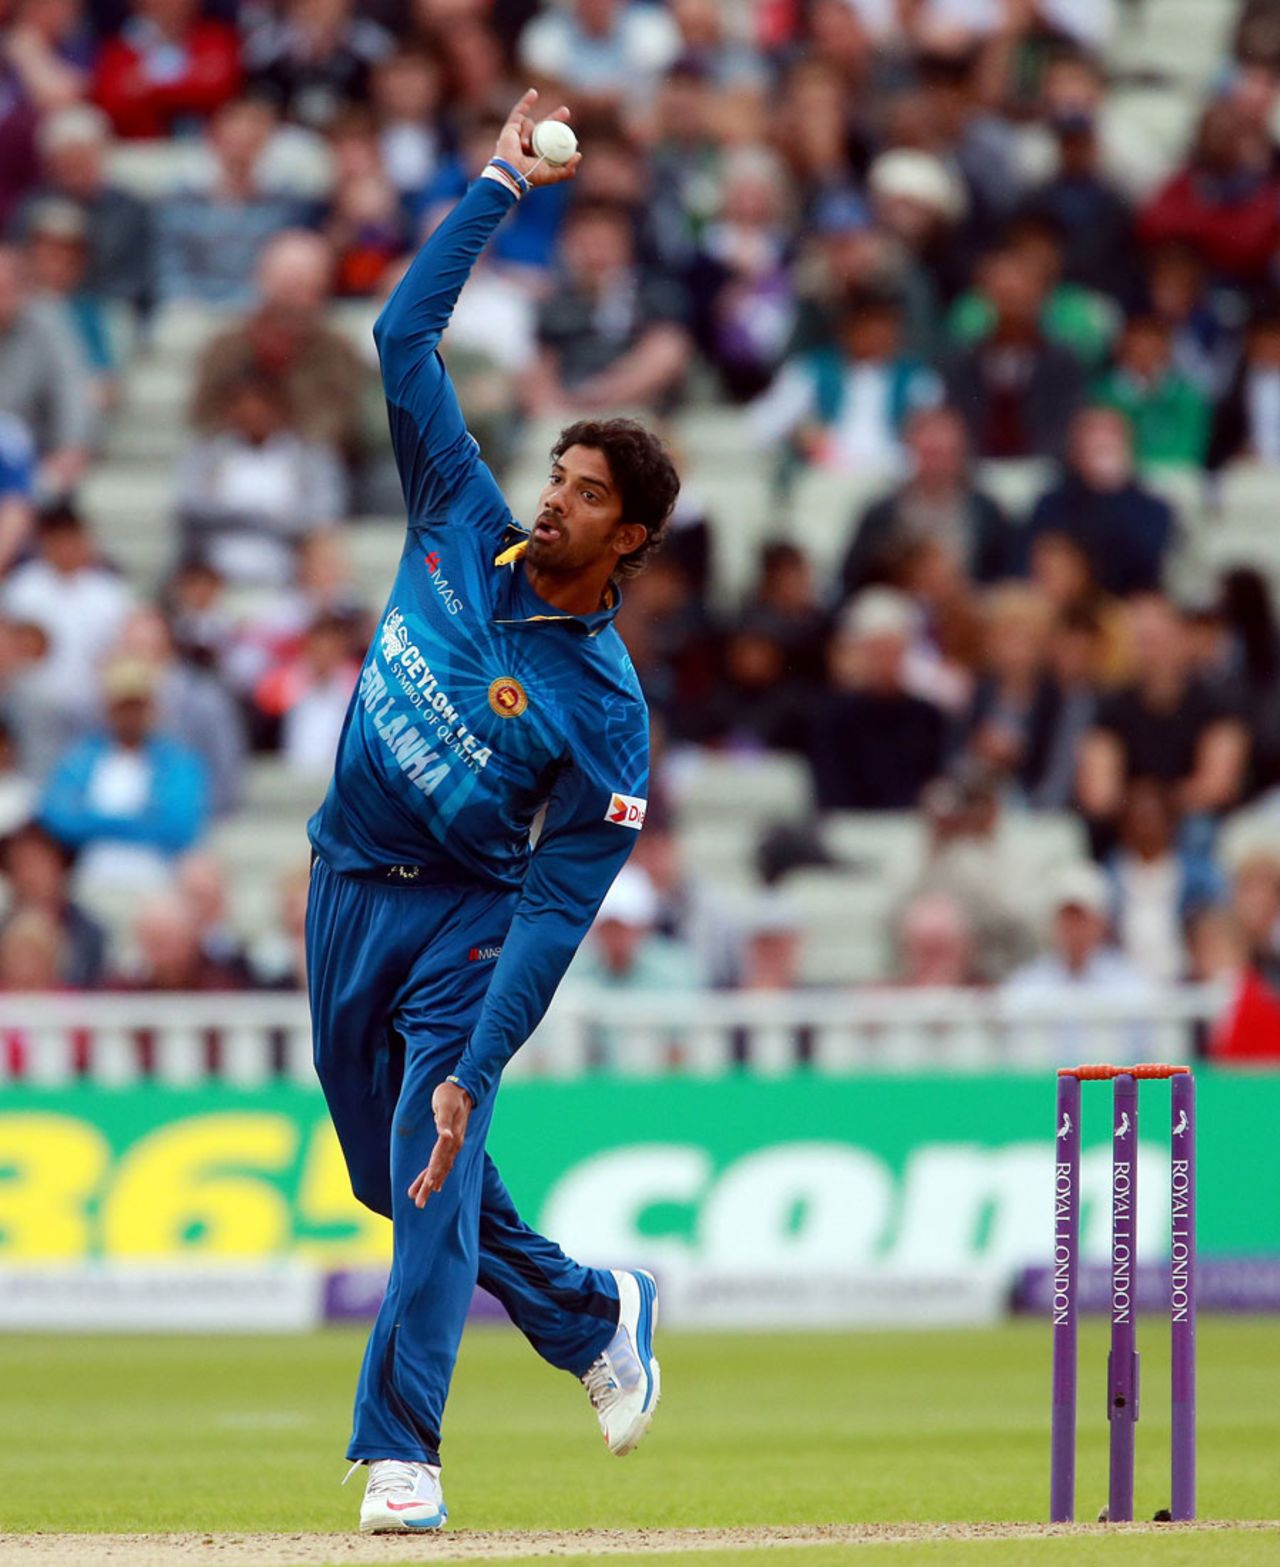 Sachithra Senanayake carried on regardless having been reported for throwing at Lord's, England v Sri Lanka, 5th ODI, Edgbaston, June 3, 2014